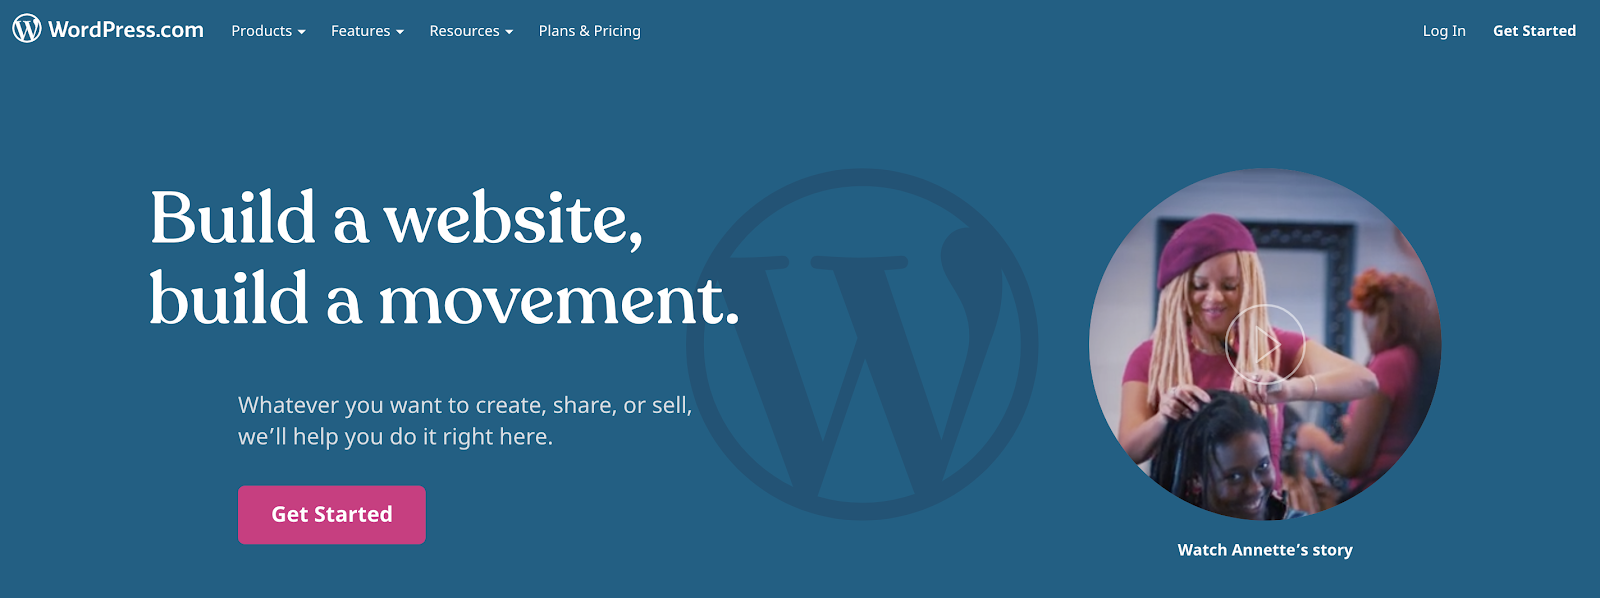 Difference Between WordPress.org and WordPress.com Homepage Screenshot